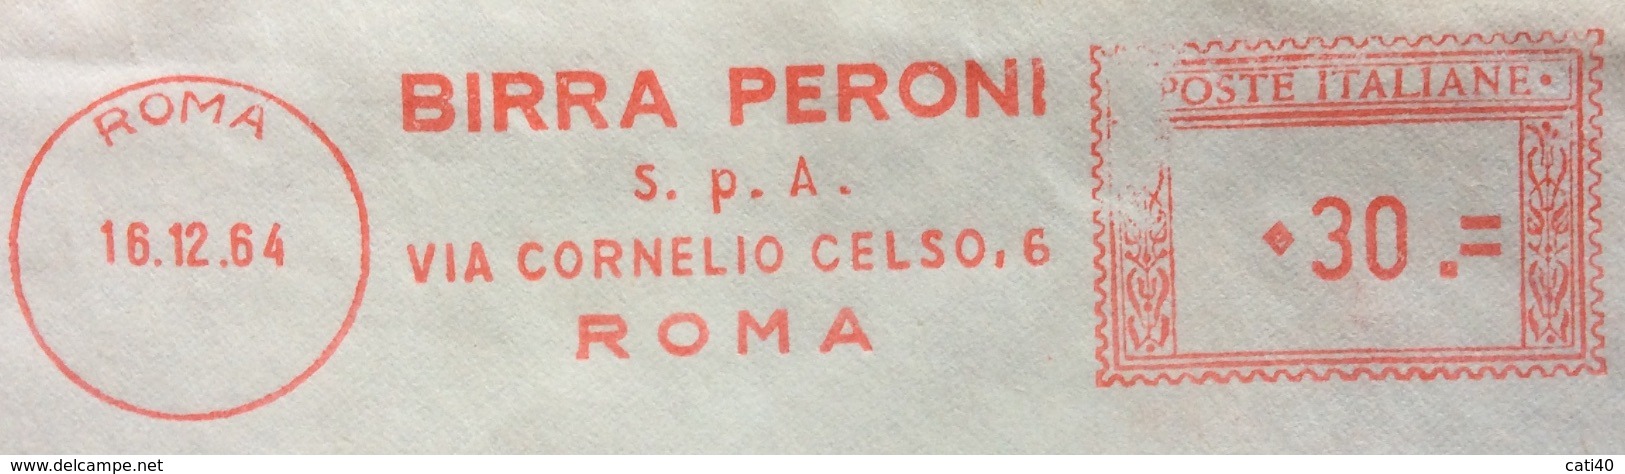 BIRRA - AFFRANCATURA ROSSA  - BIRRA PERONI S.p.A. ROMA - MARCHIO BIRRA PERONI ROMA - 1946-60: Poststempel